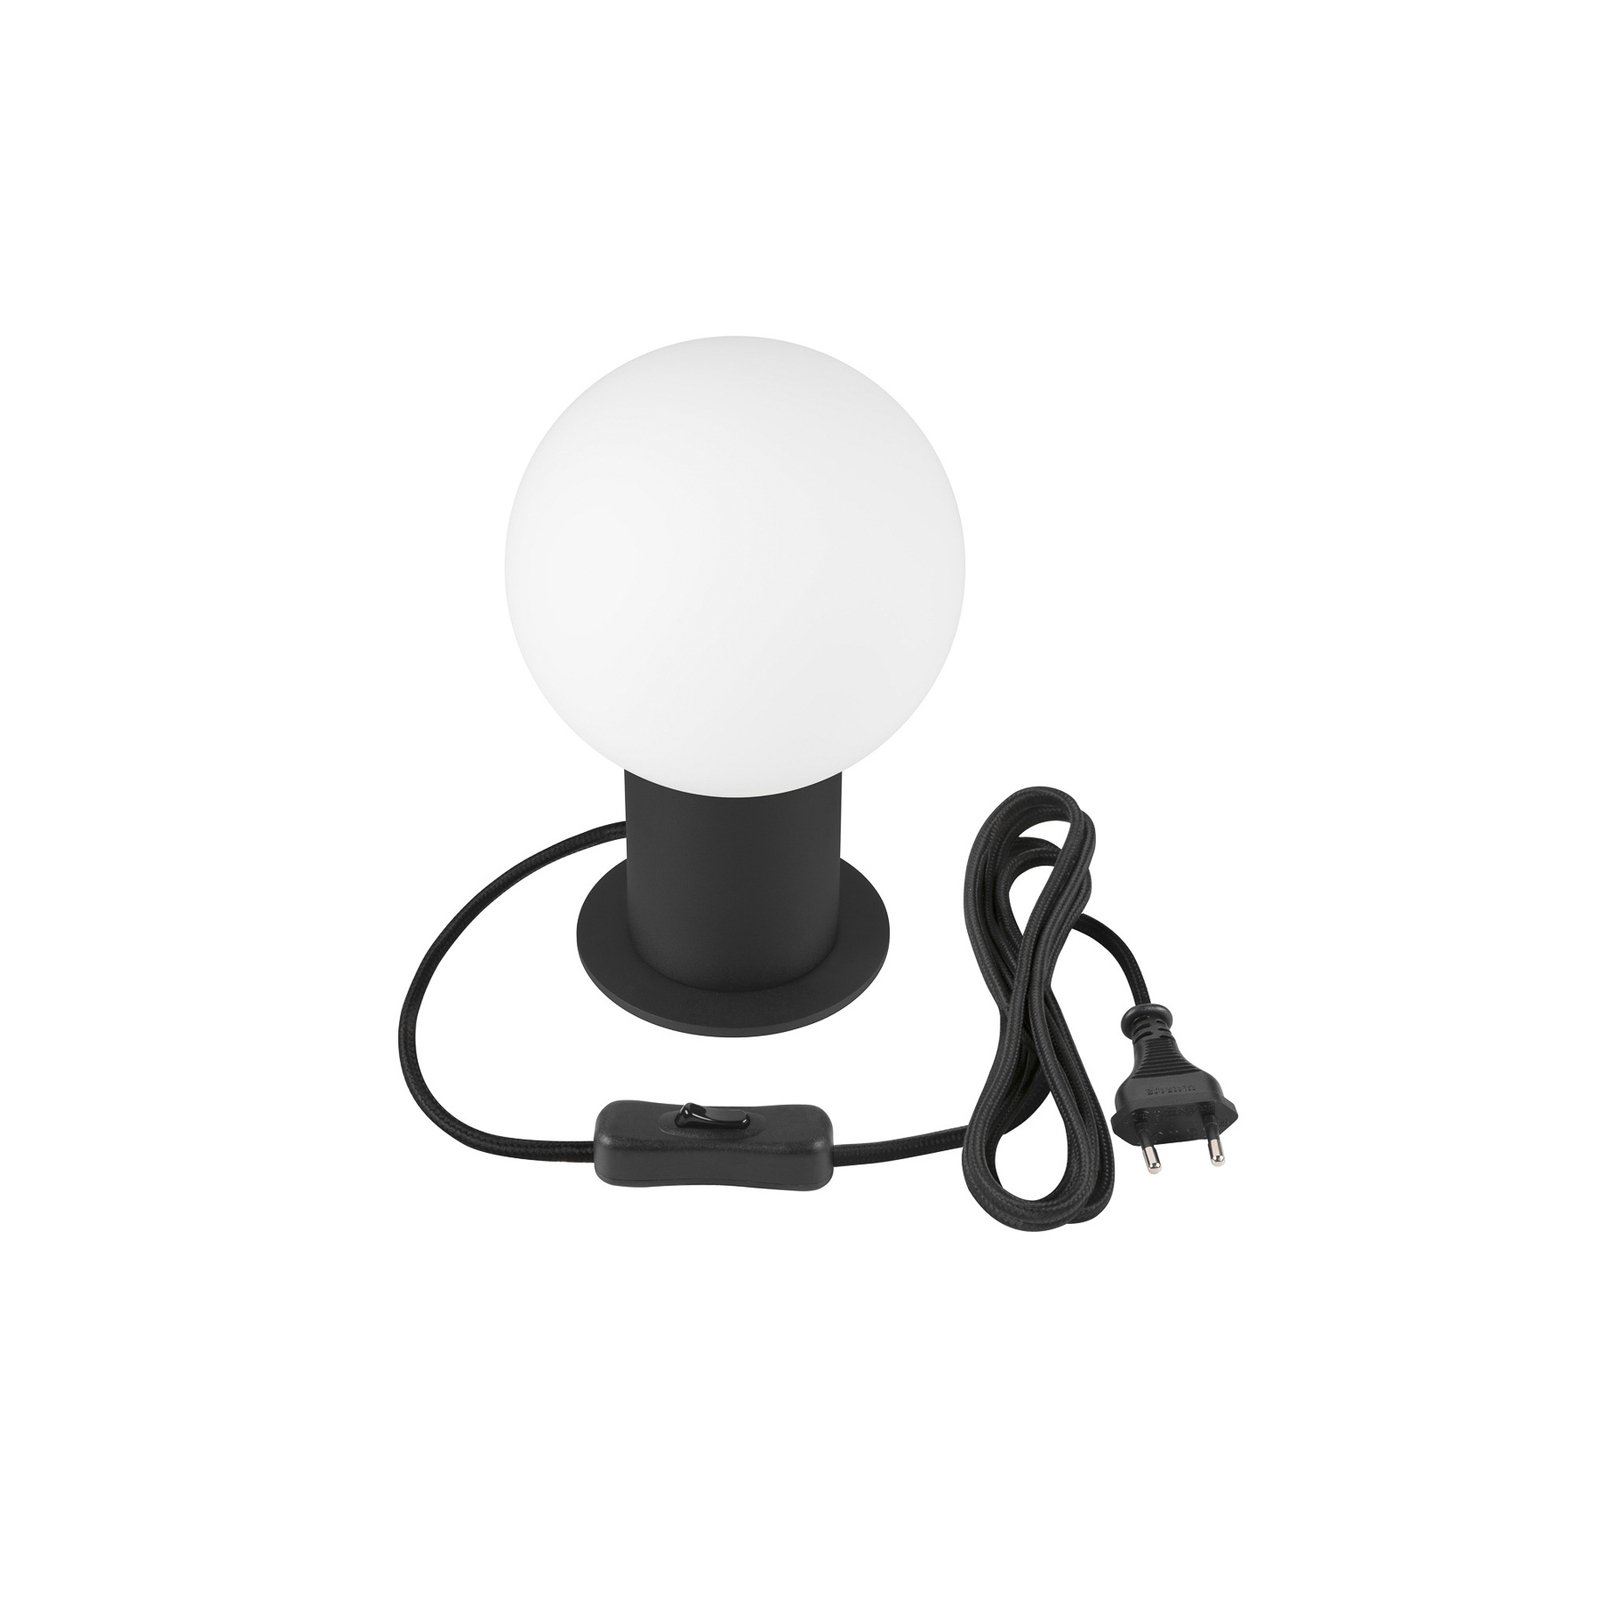 SLV Varyt tafellamp, zwart, aluminium, hoogte 19,2 cm